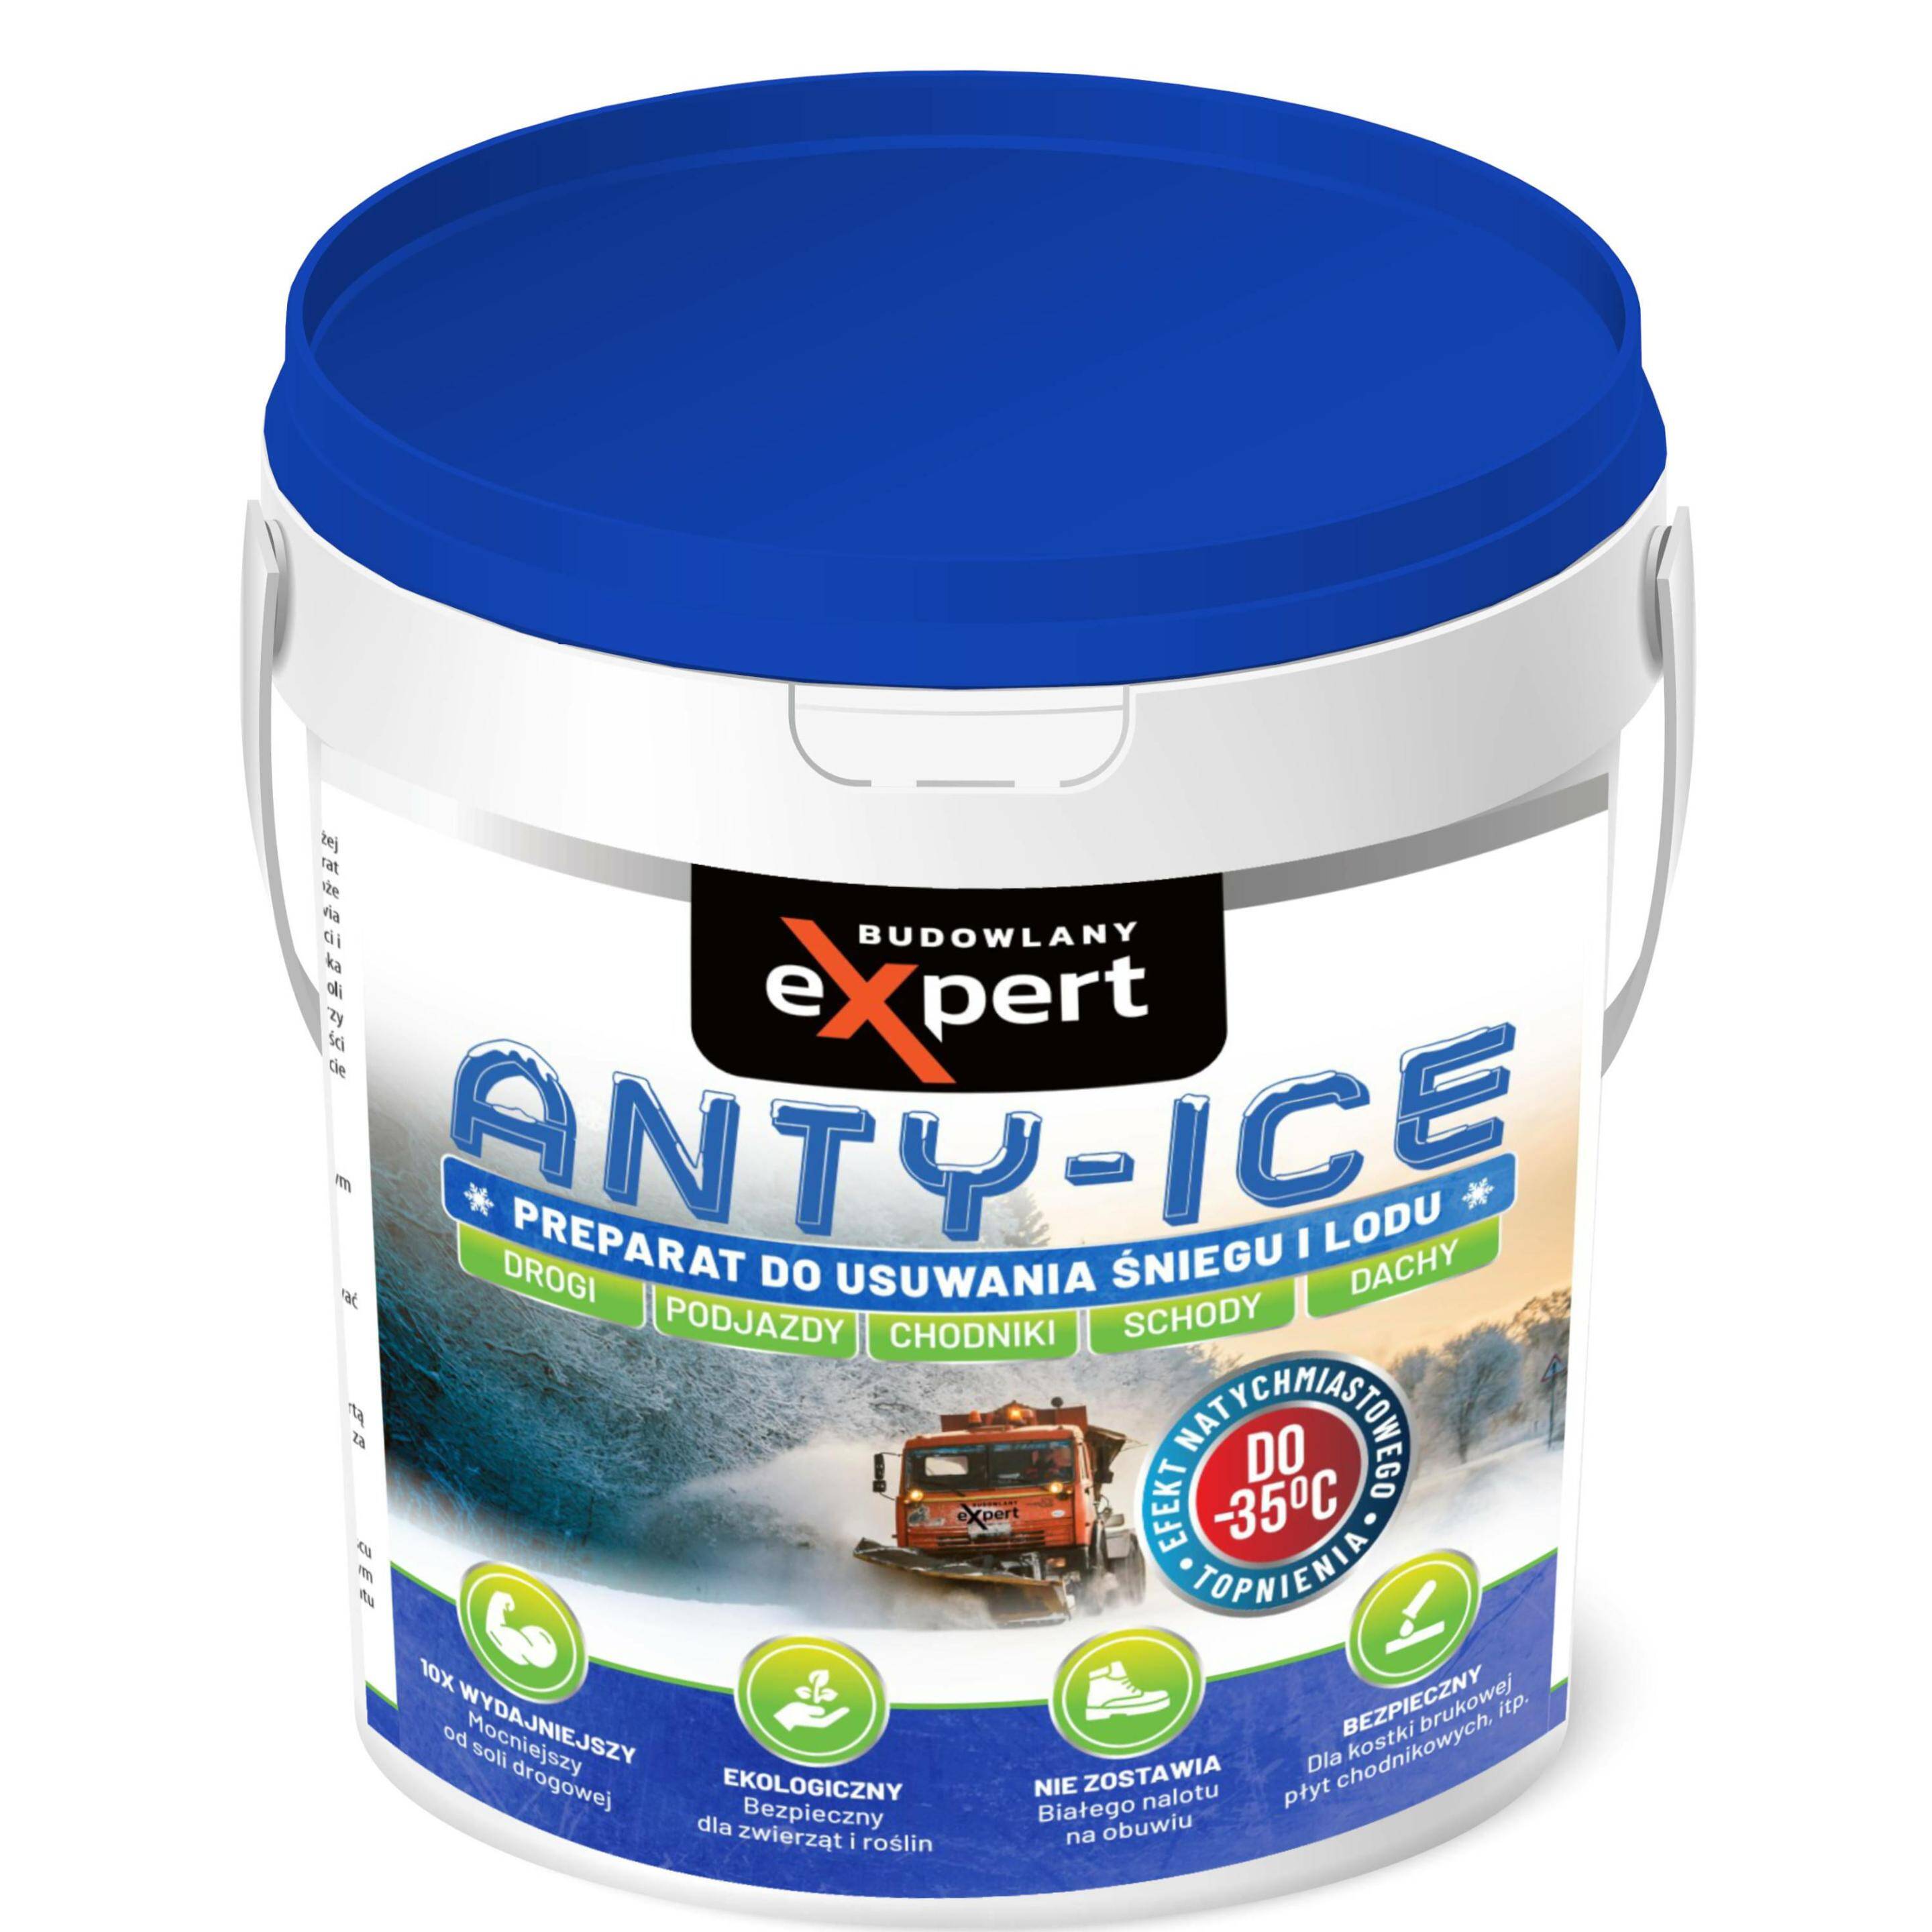 BE ANTY-ICE 10kg preparat do usuwania